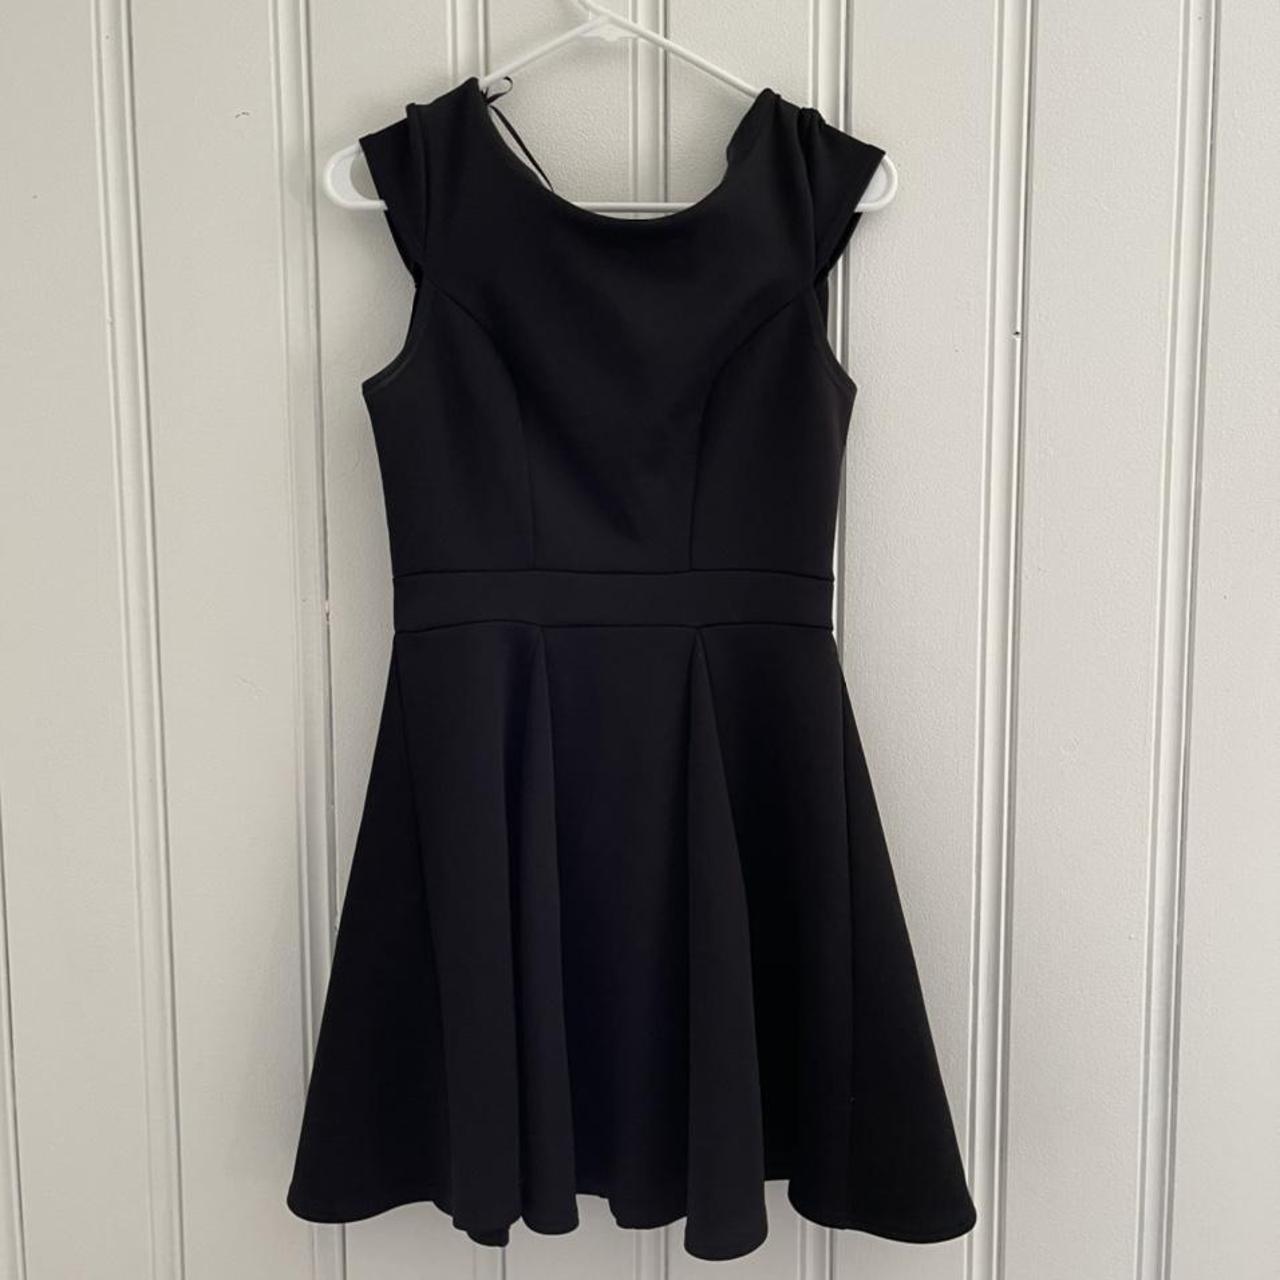 Closet London Women's Black Dress